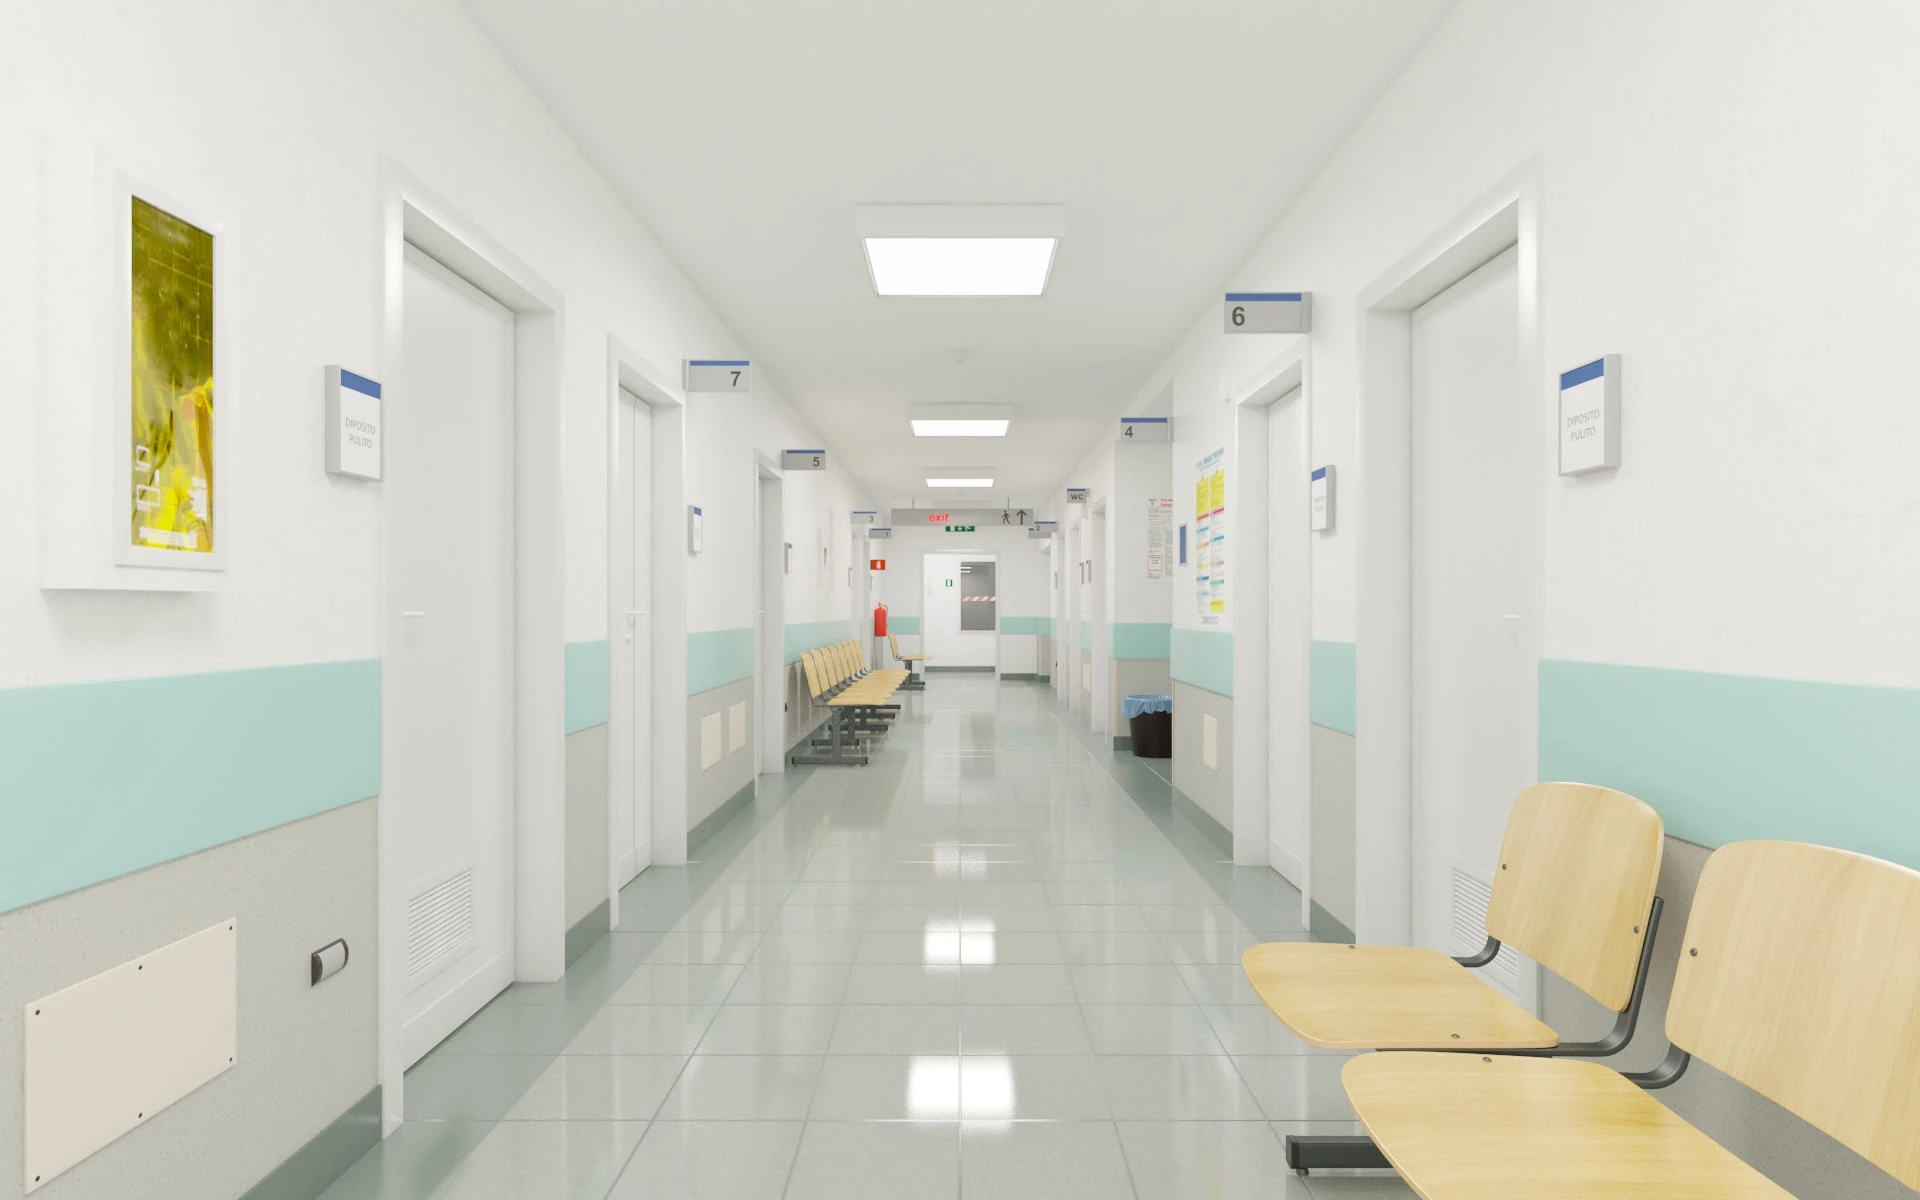 019 Hospital Hallway Corridor 3D Model_01